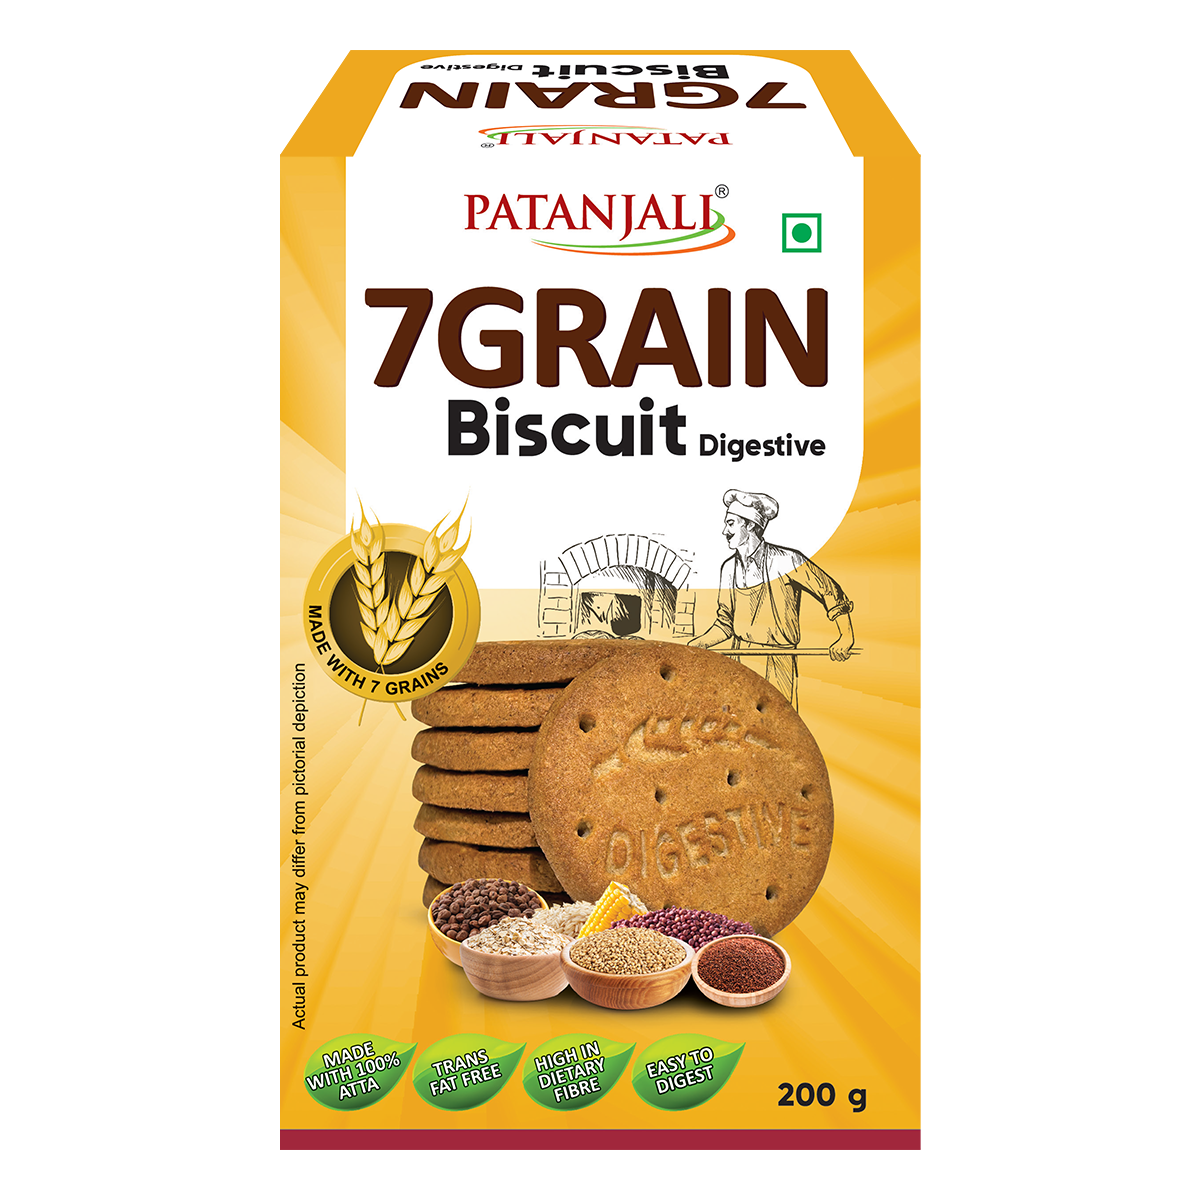 7 Grain Digestive Biscuit